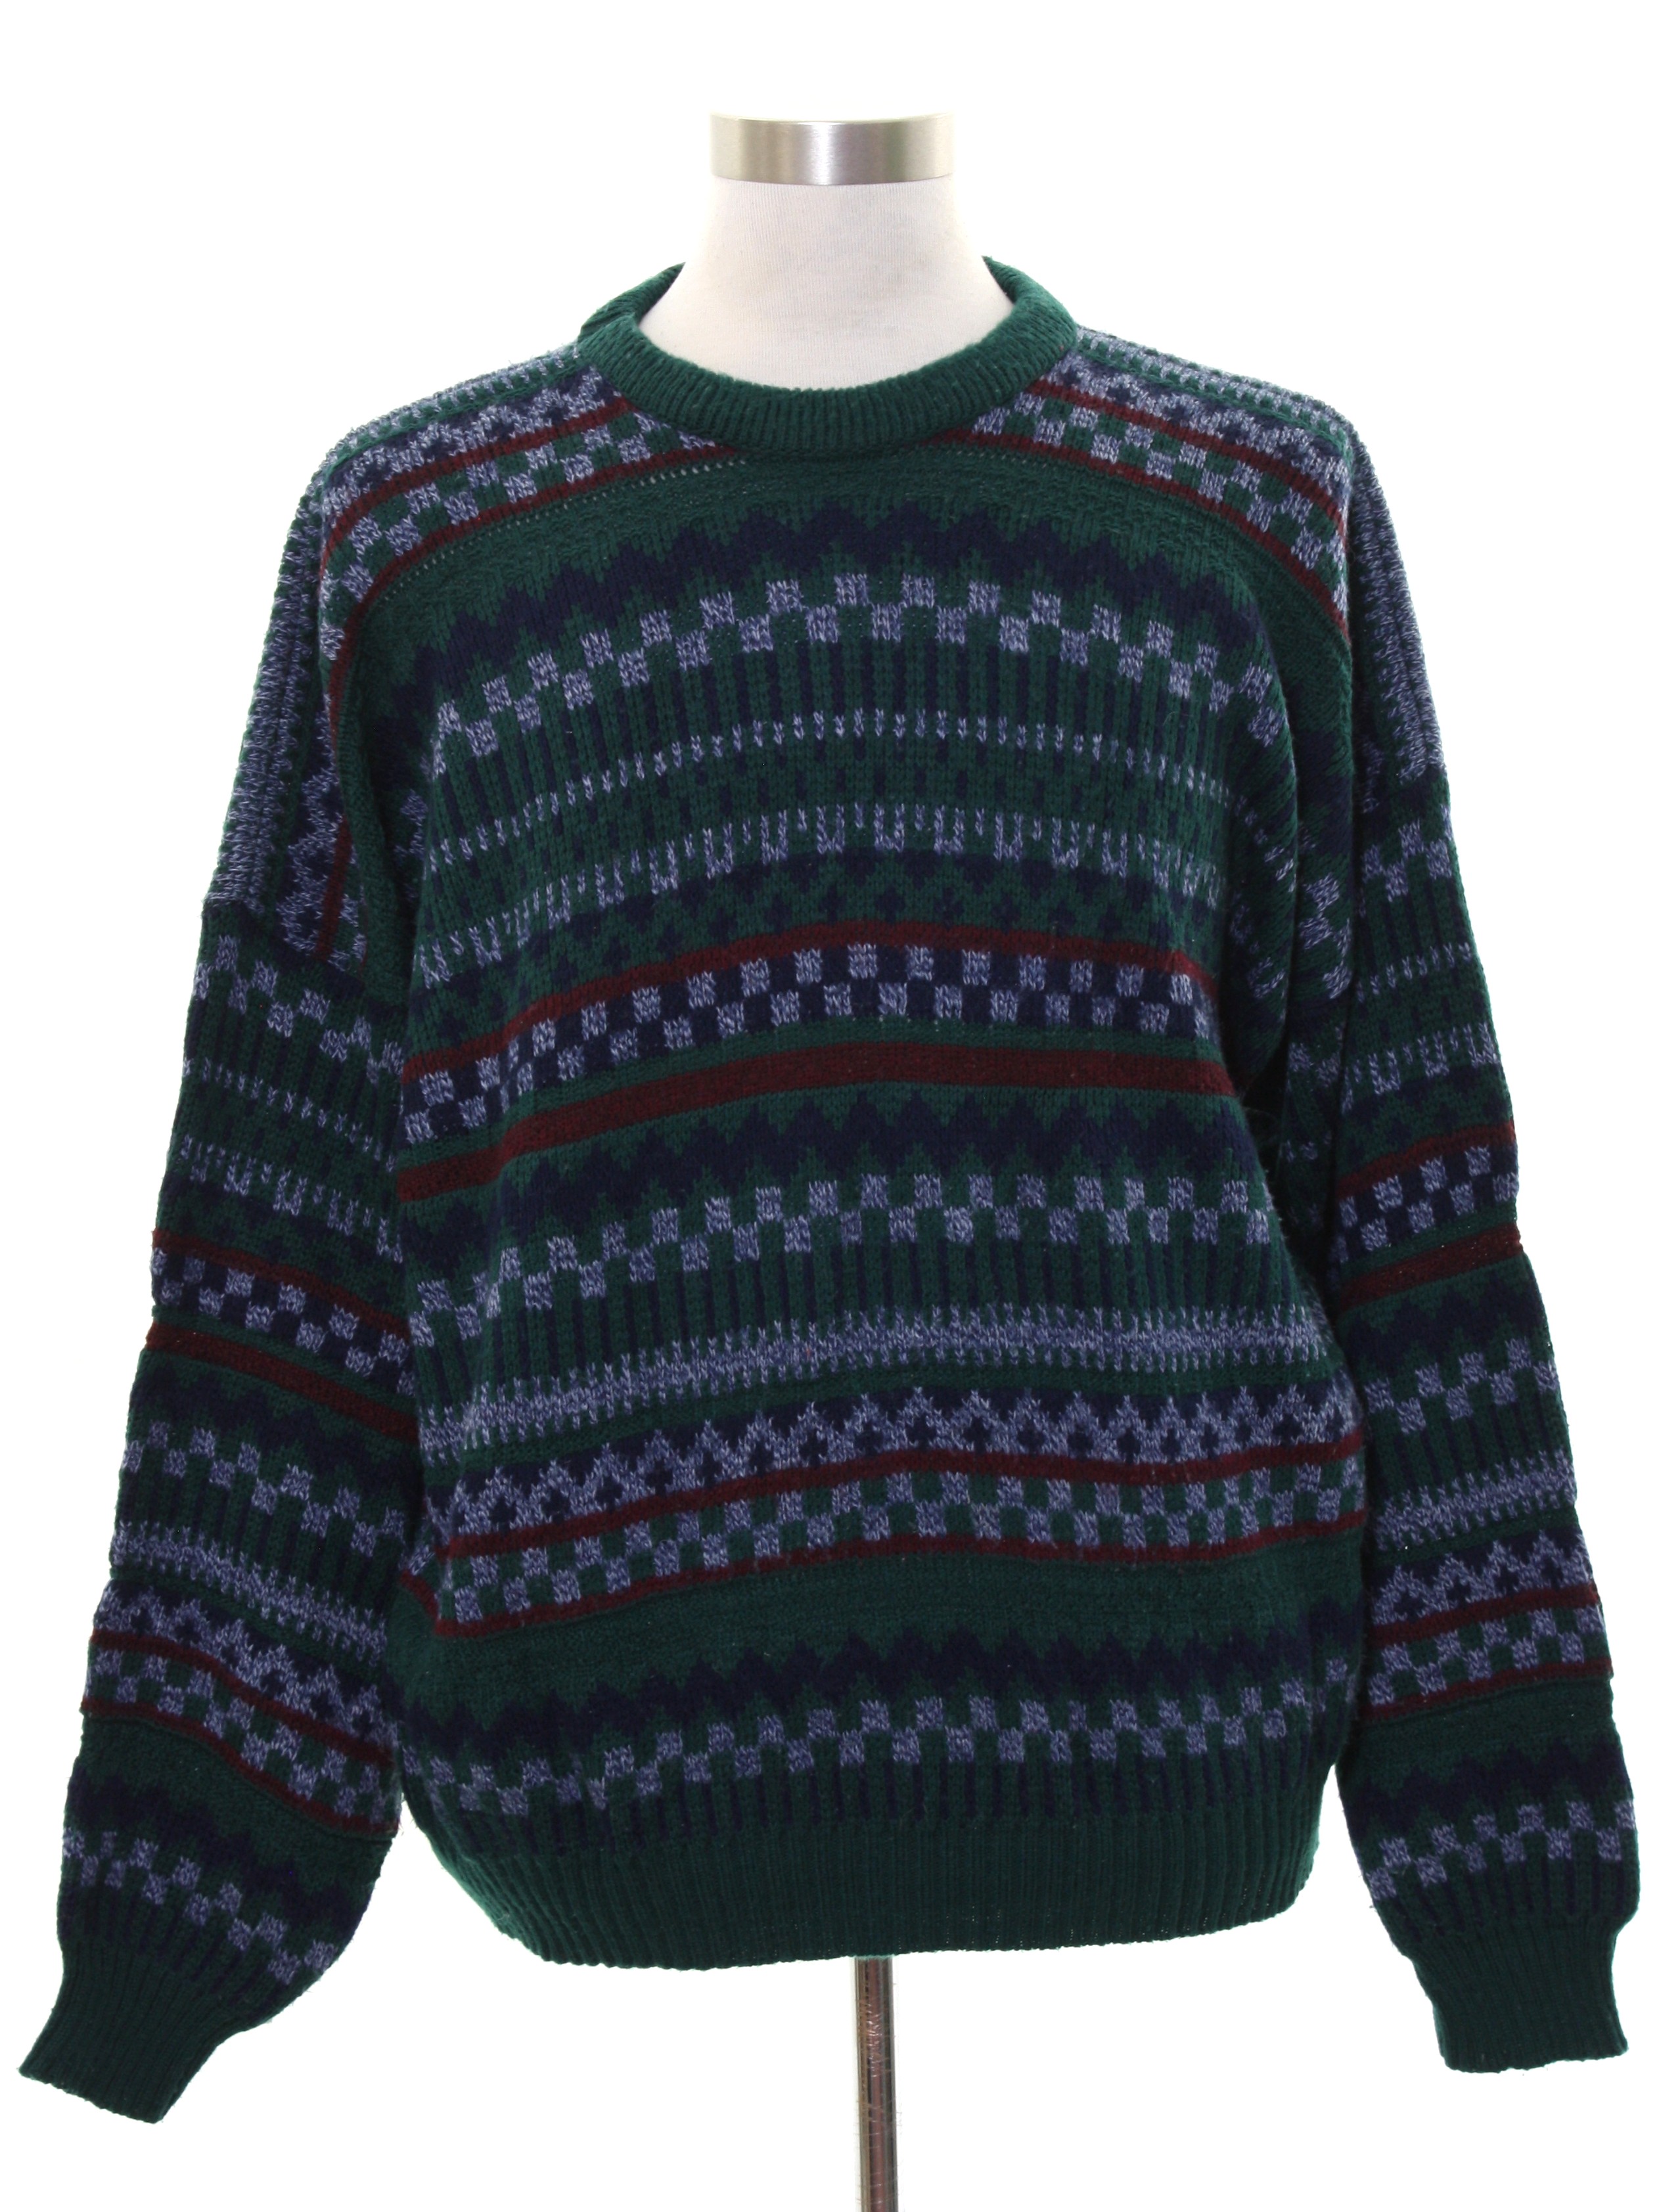 Retro 1980's Sweater (Sears Mens Store) : 80s -Sears Mens Store- Mens ...